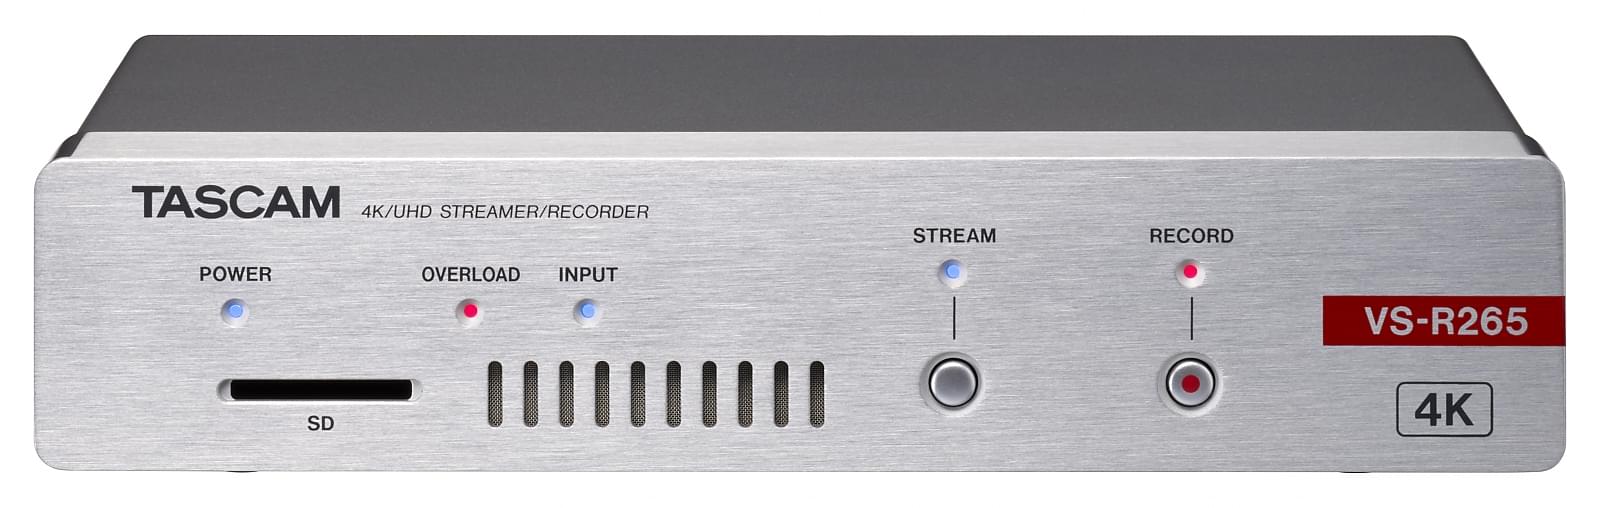 4K/UHD Video Streamer/Recorder | Tascam VS-R265